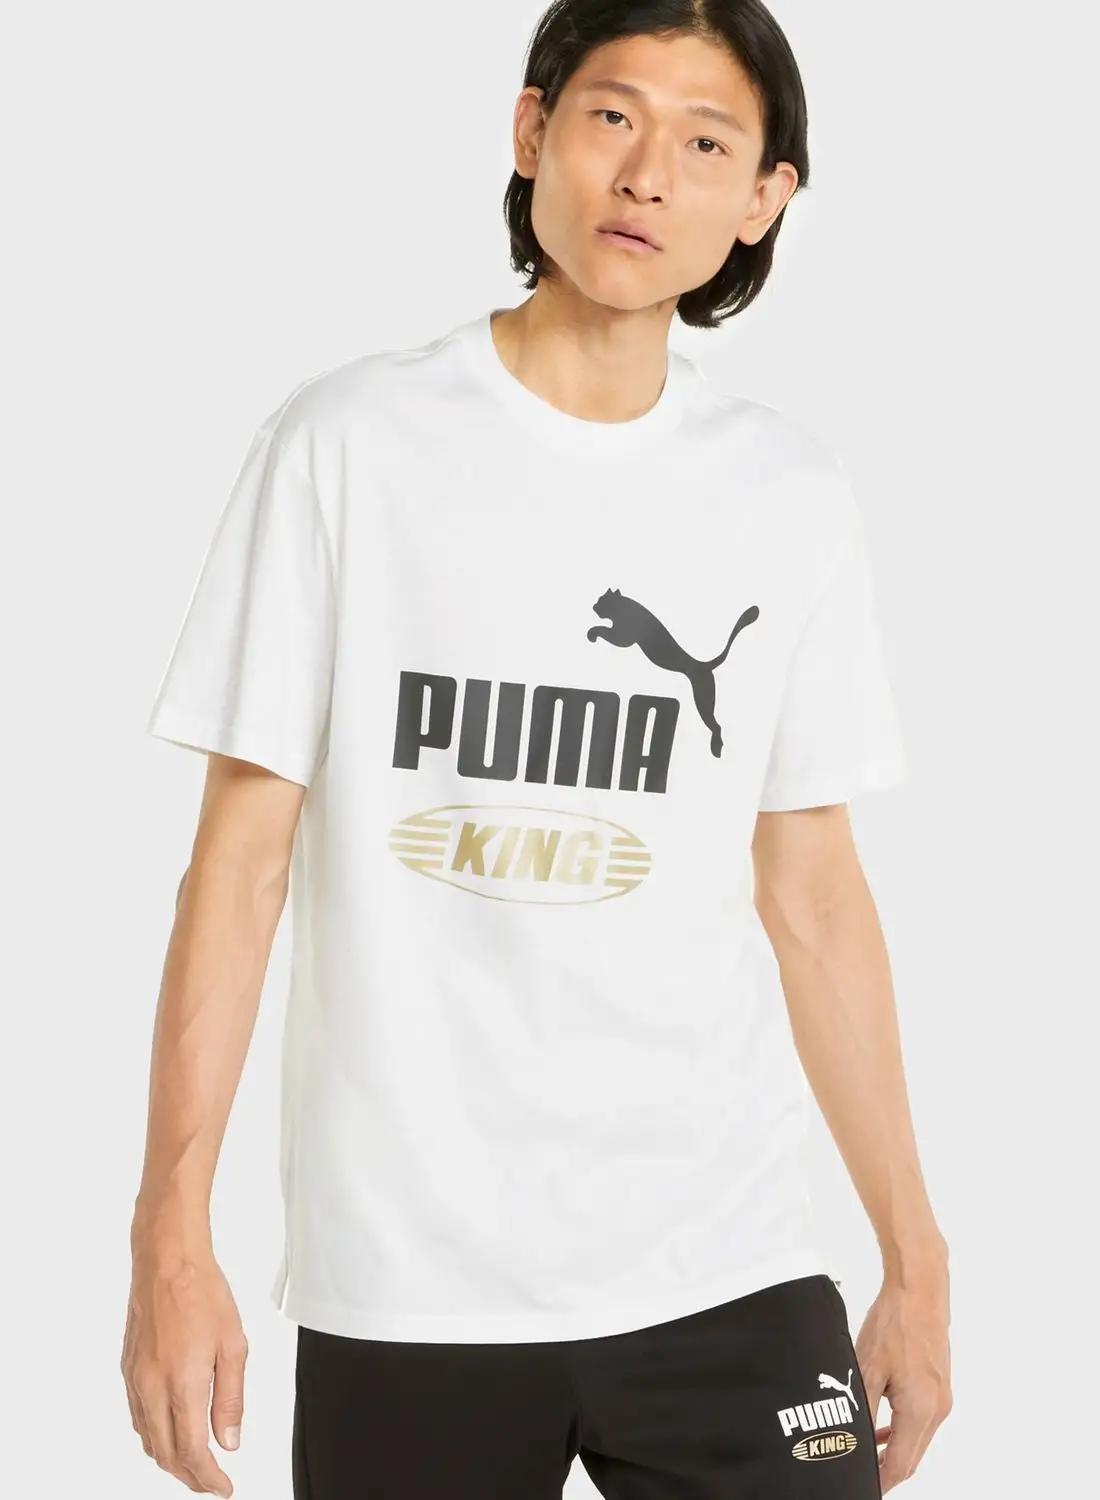 PUMA King Logo T-Shirt